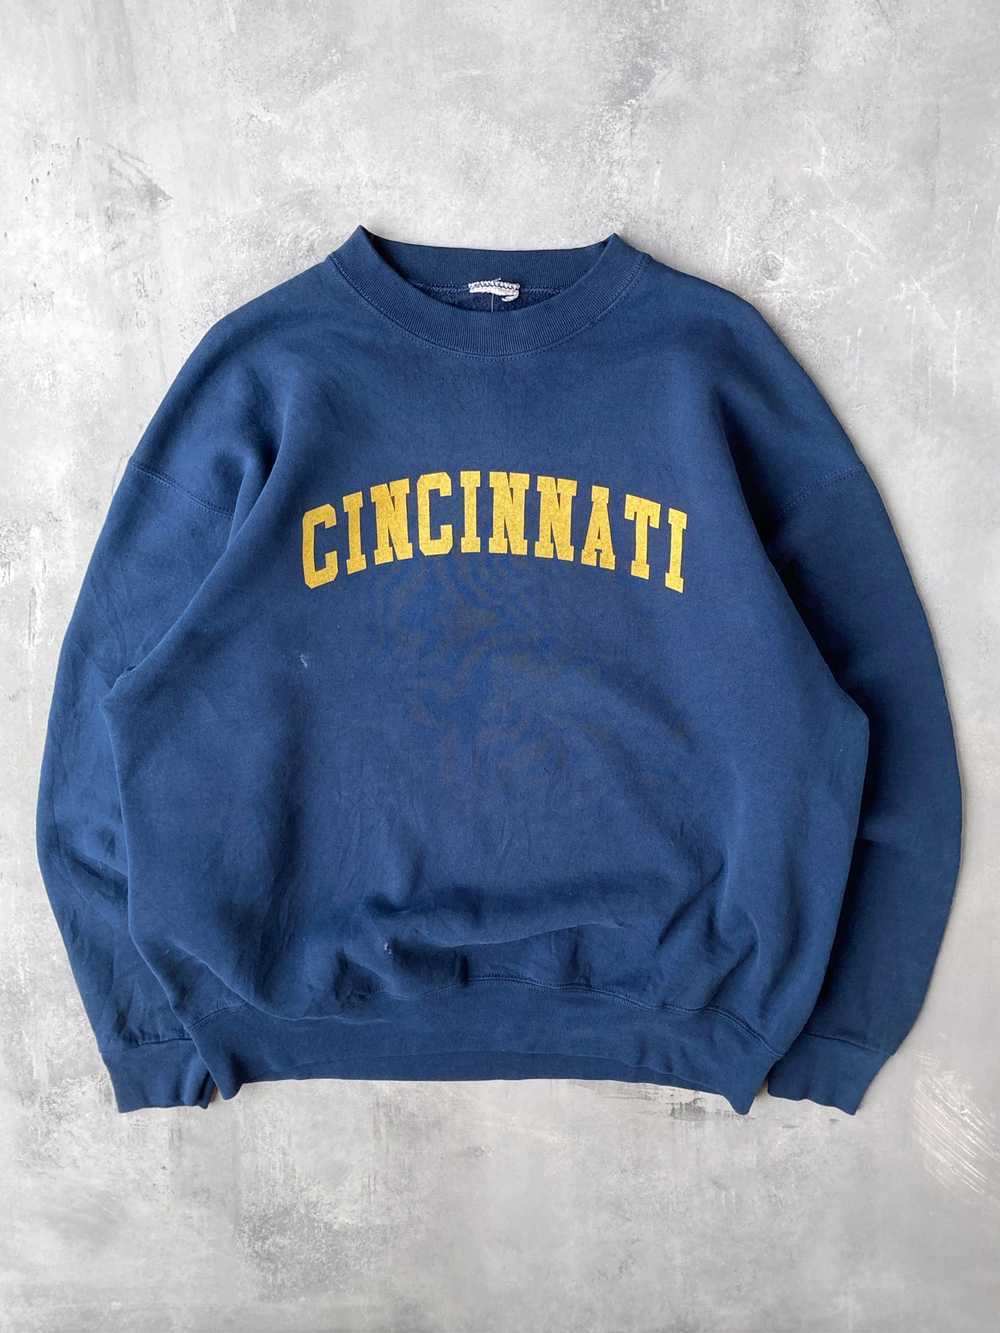 Cincinnati Sweatshirt 90's - XL - image 1